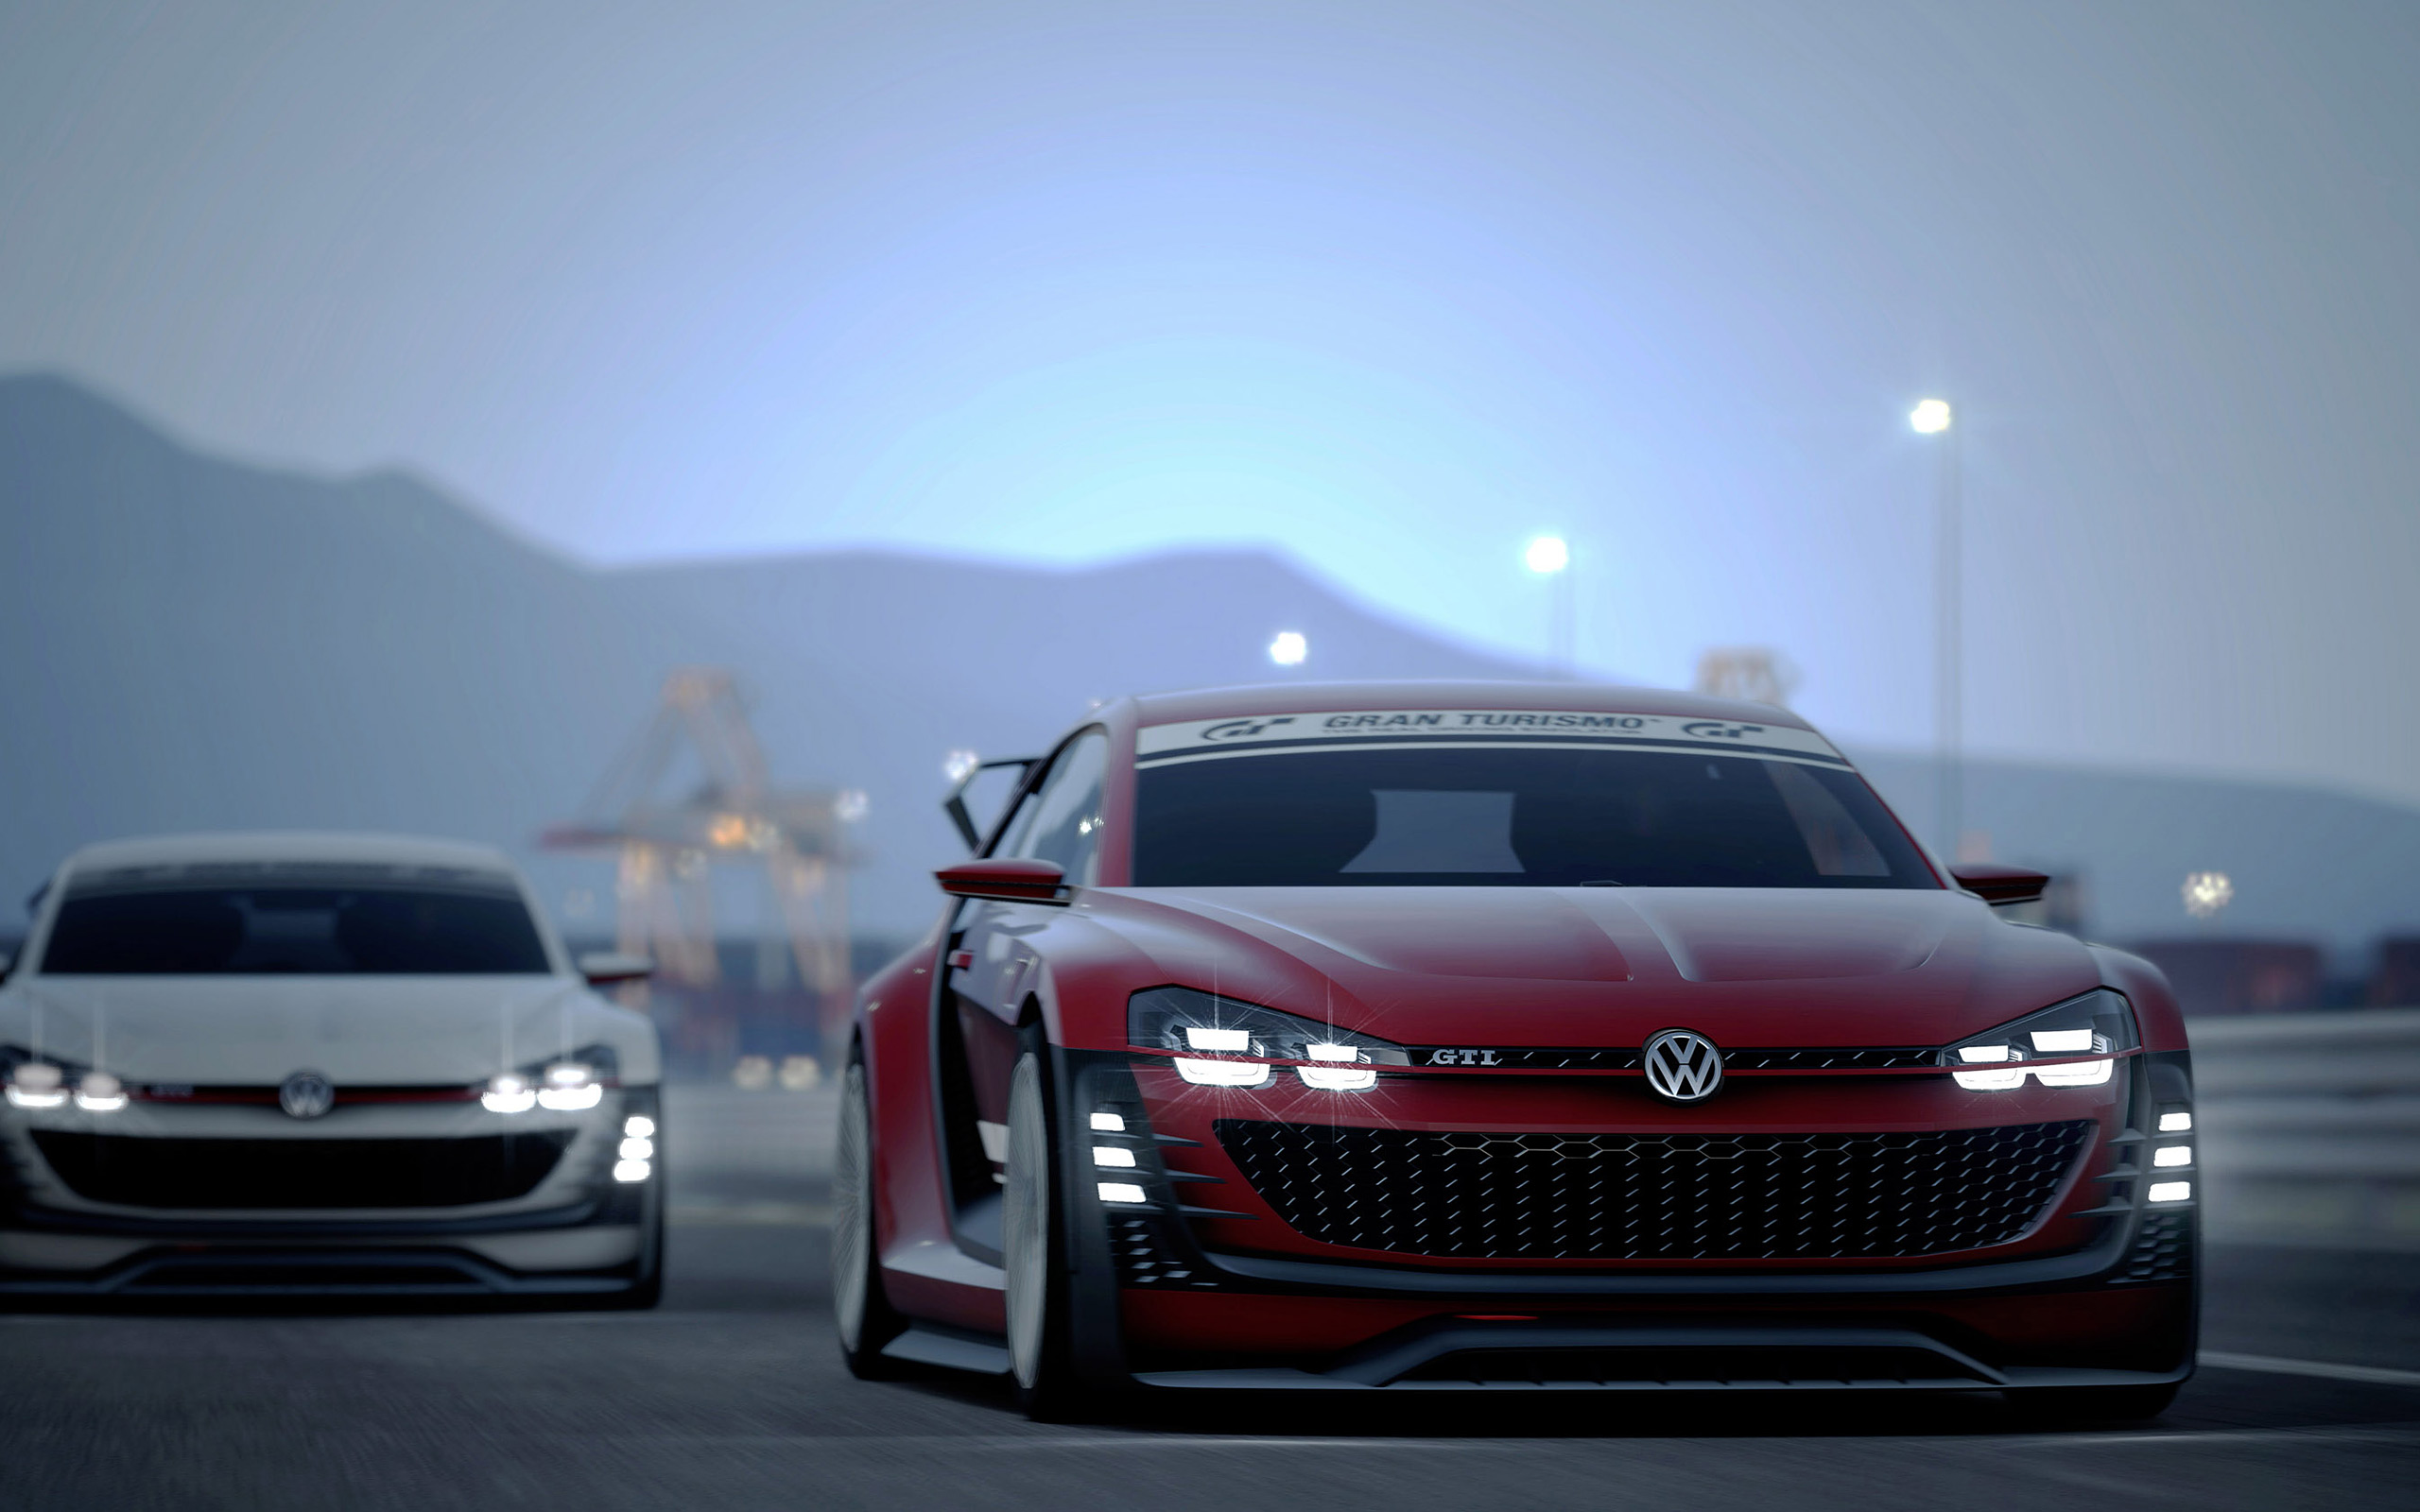  2015 Volkswagen GTI Supersport Vision Gran Turismo Concept Wallpaper.